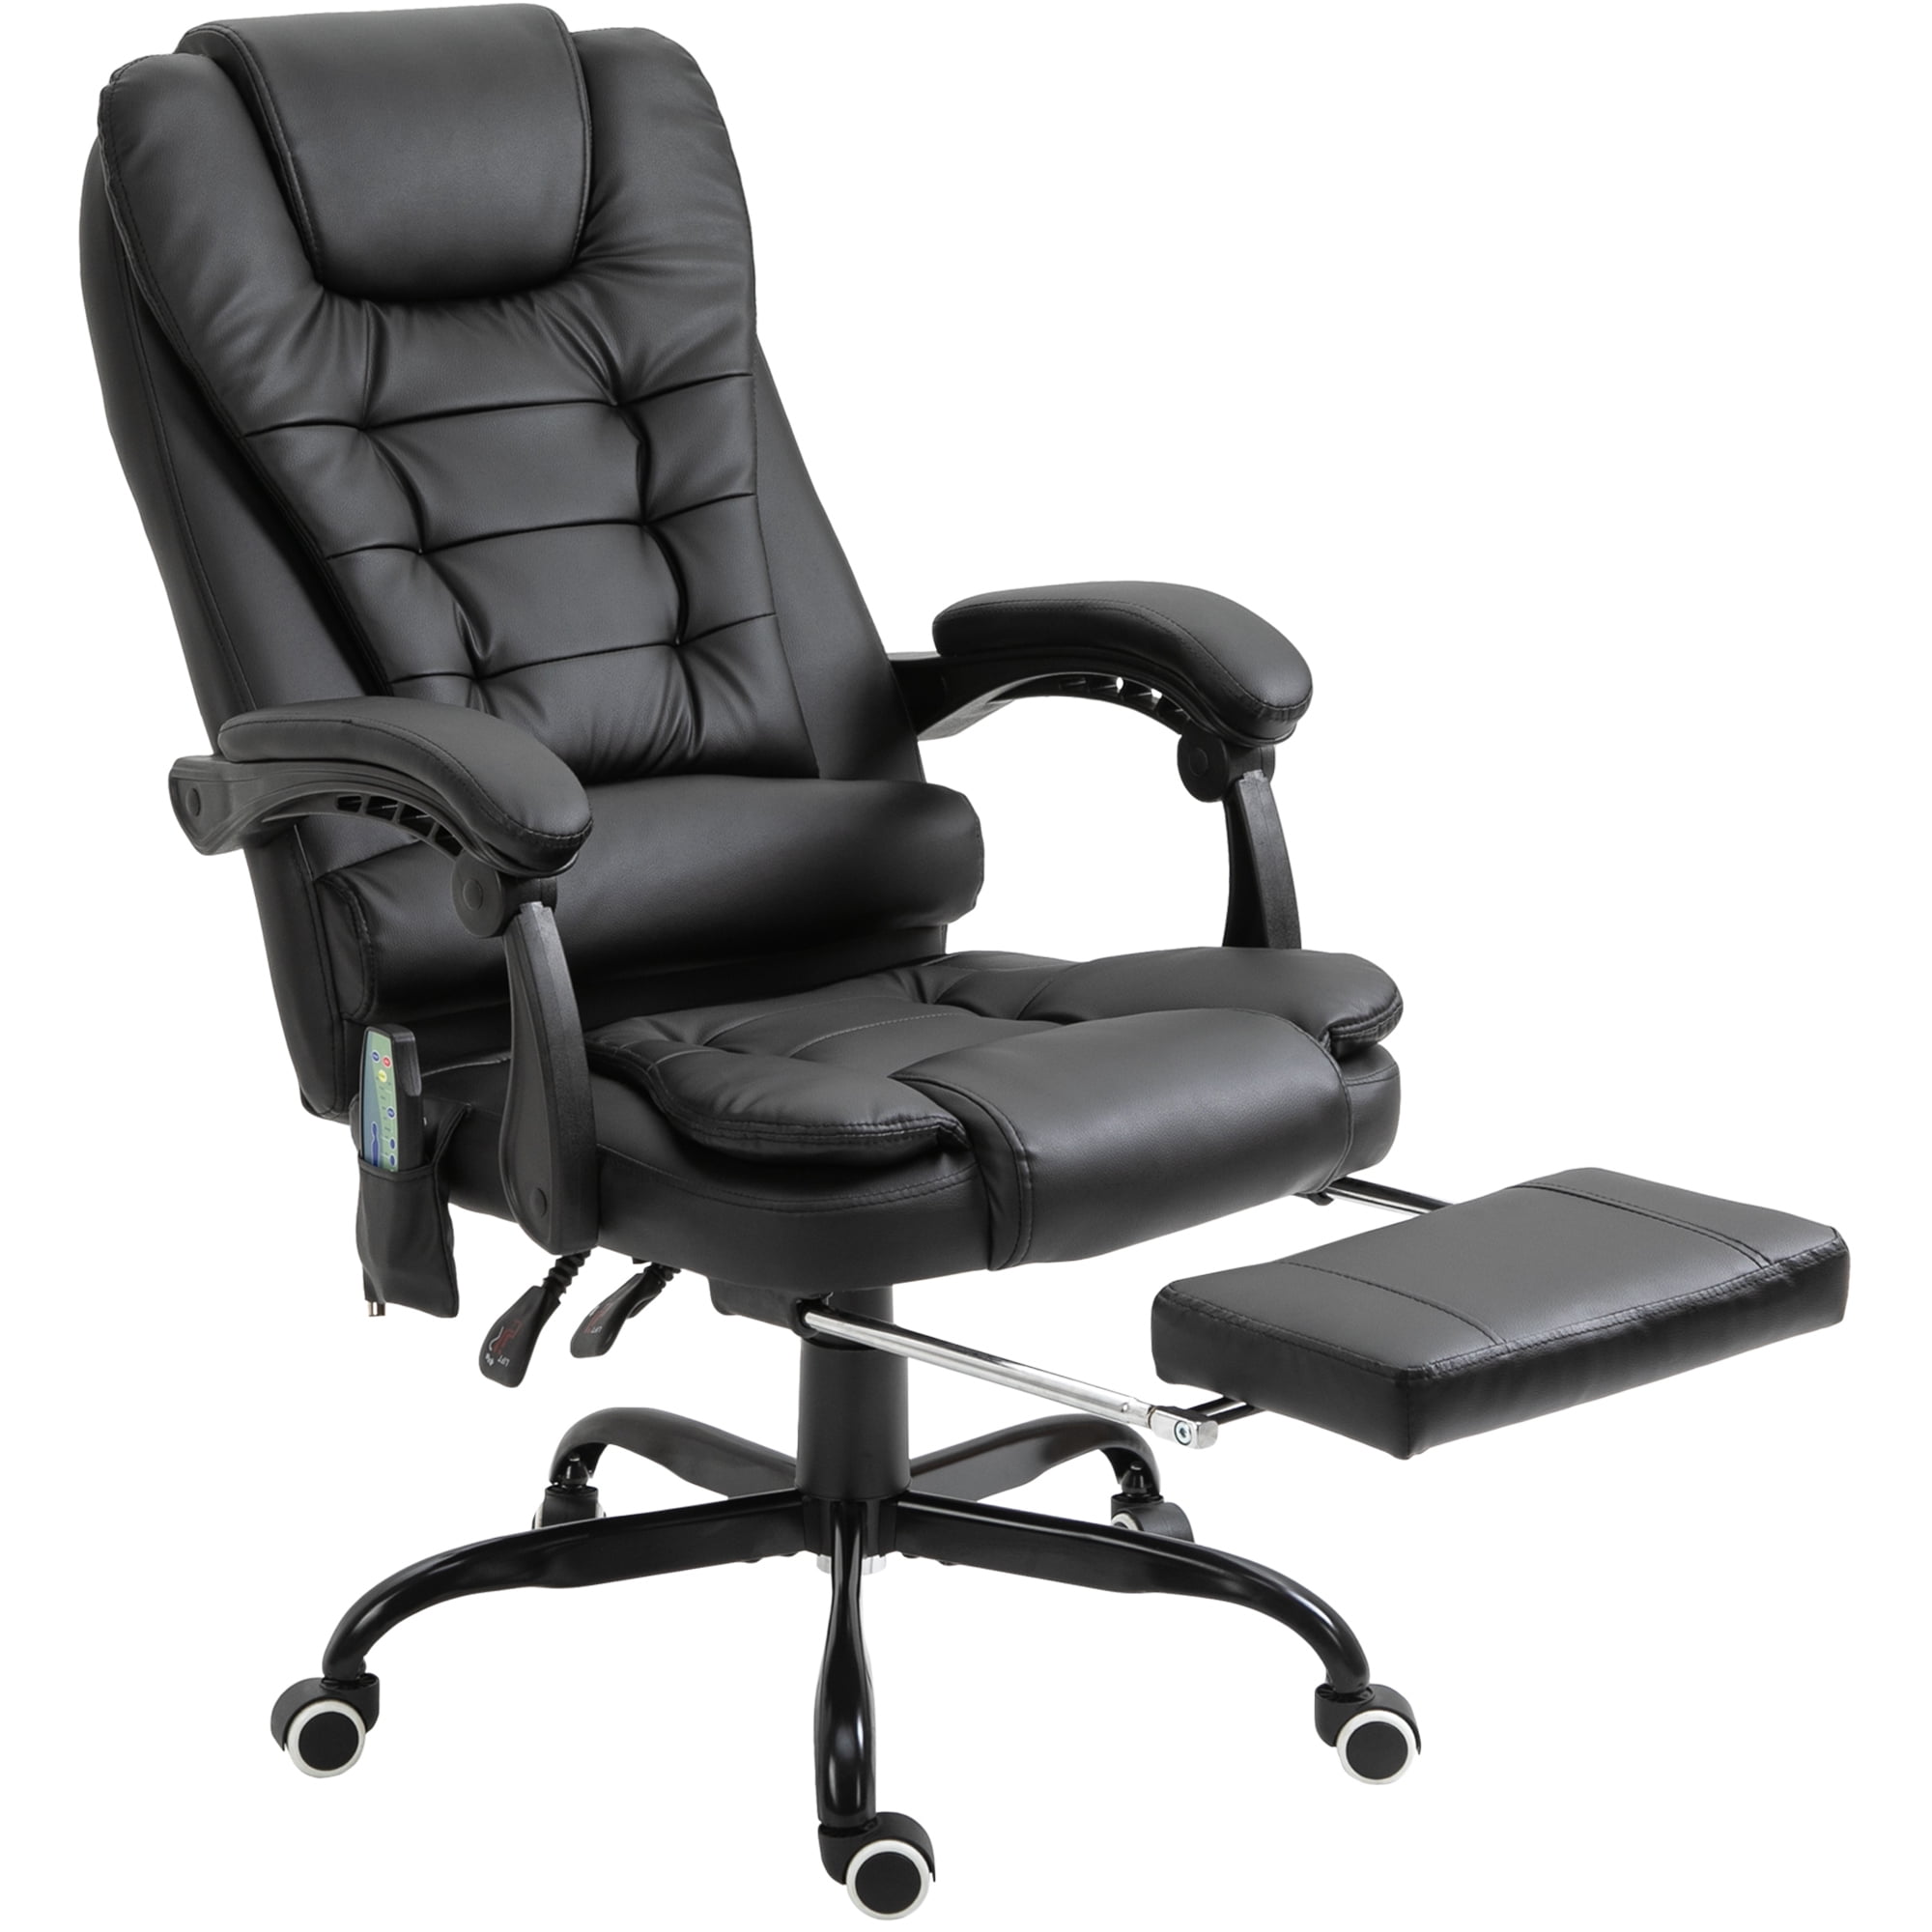 Lumbar Support Headrest Footrest, Reclining Massage Chair With Heat Function